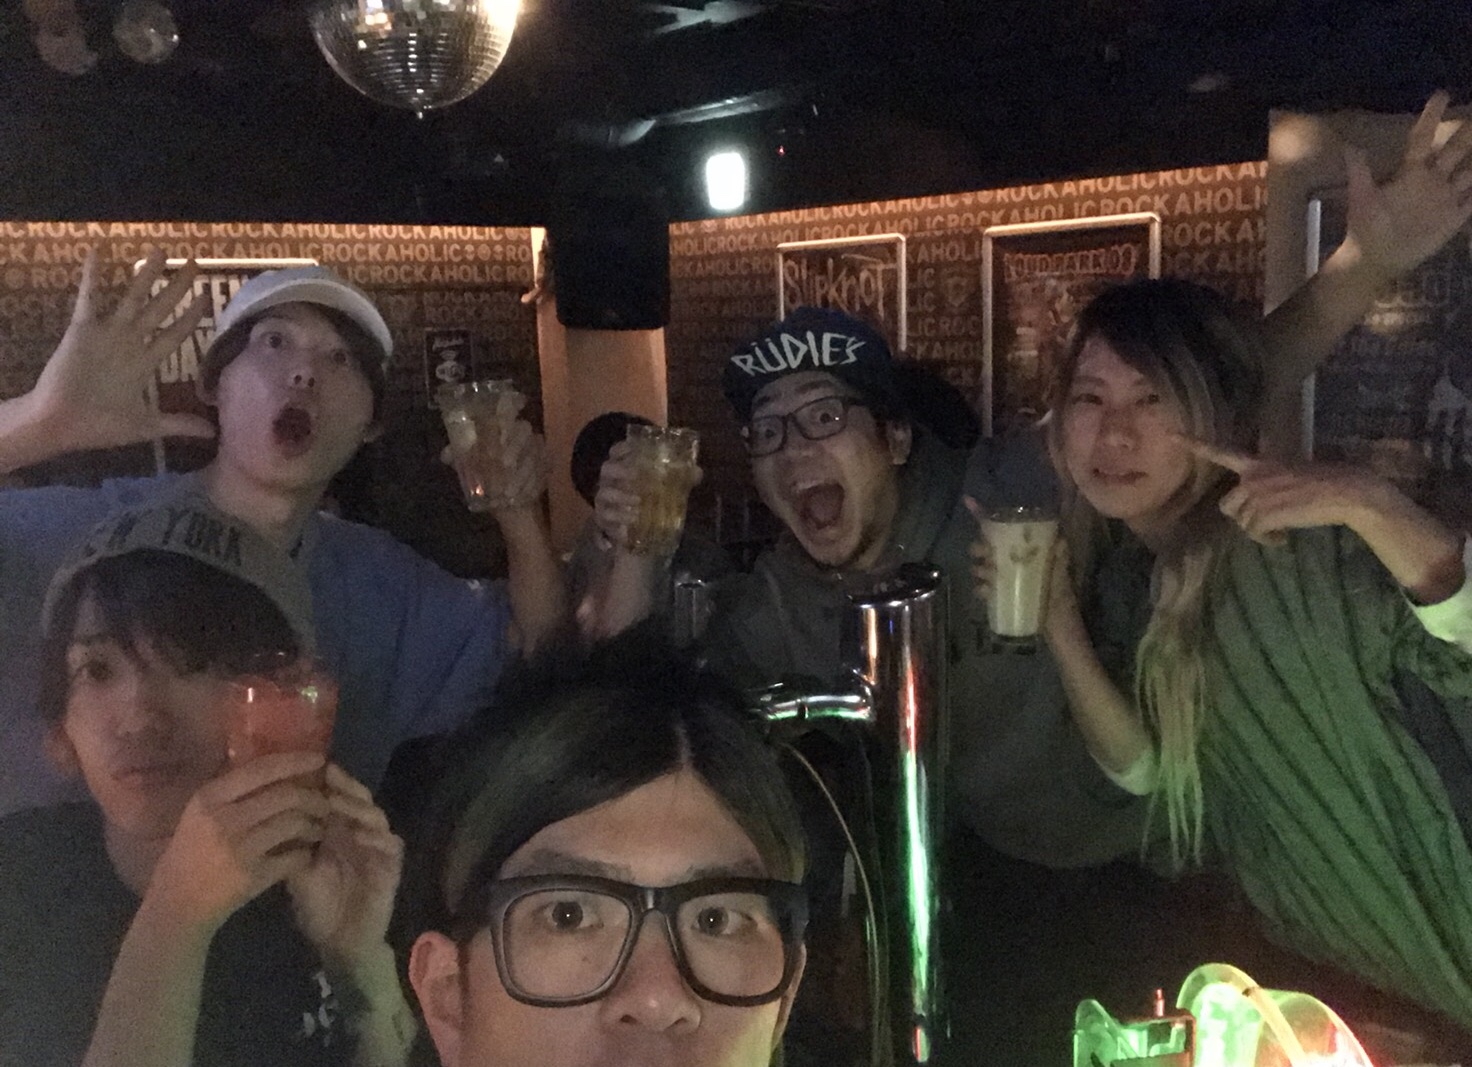 https://bar-rockaholic.jp/shibuya/blog/F9A2FB38-B260-496F-9B1A-3AB11F37F848.jpeg